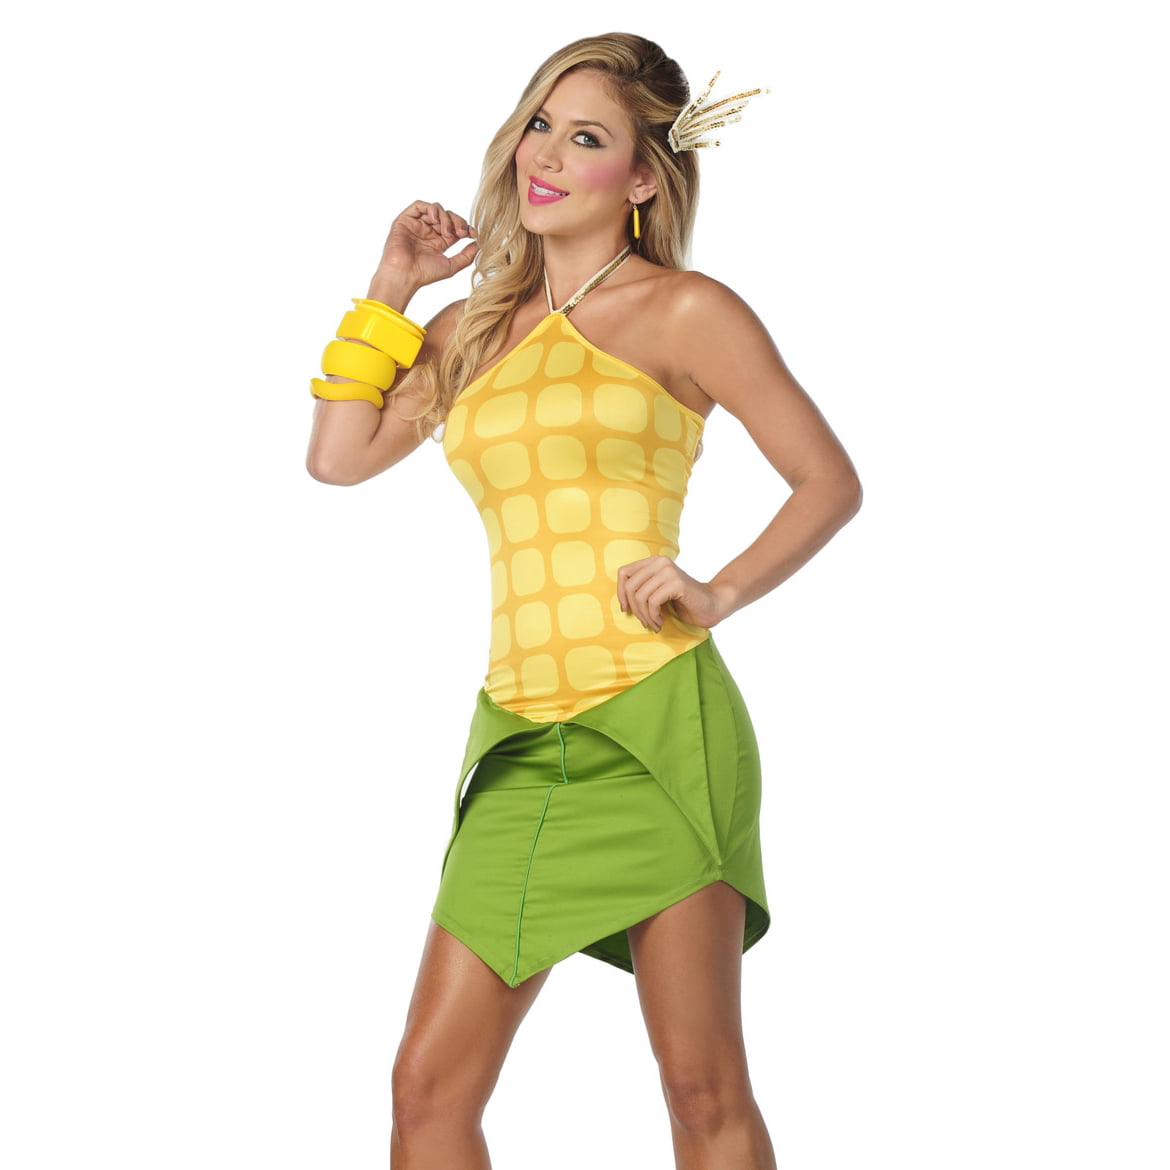 Sexy Corn Costume Walmart Com Walmart Com,What Is Tanf Mean